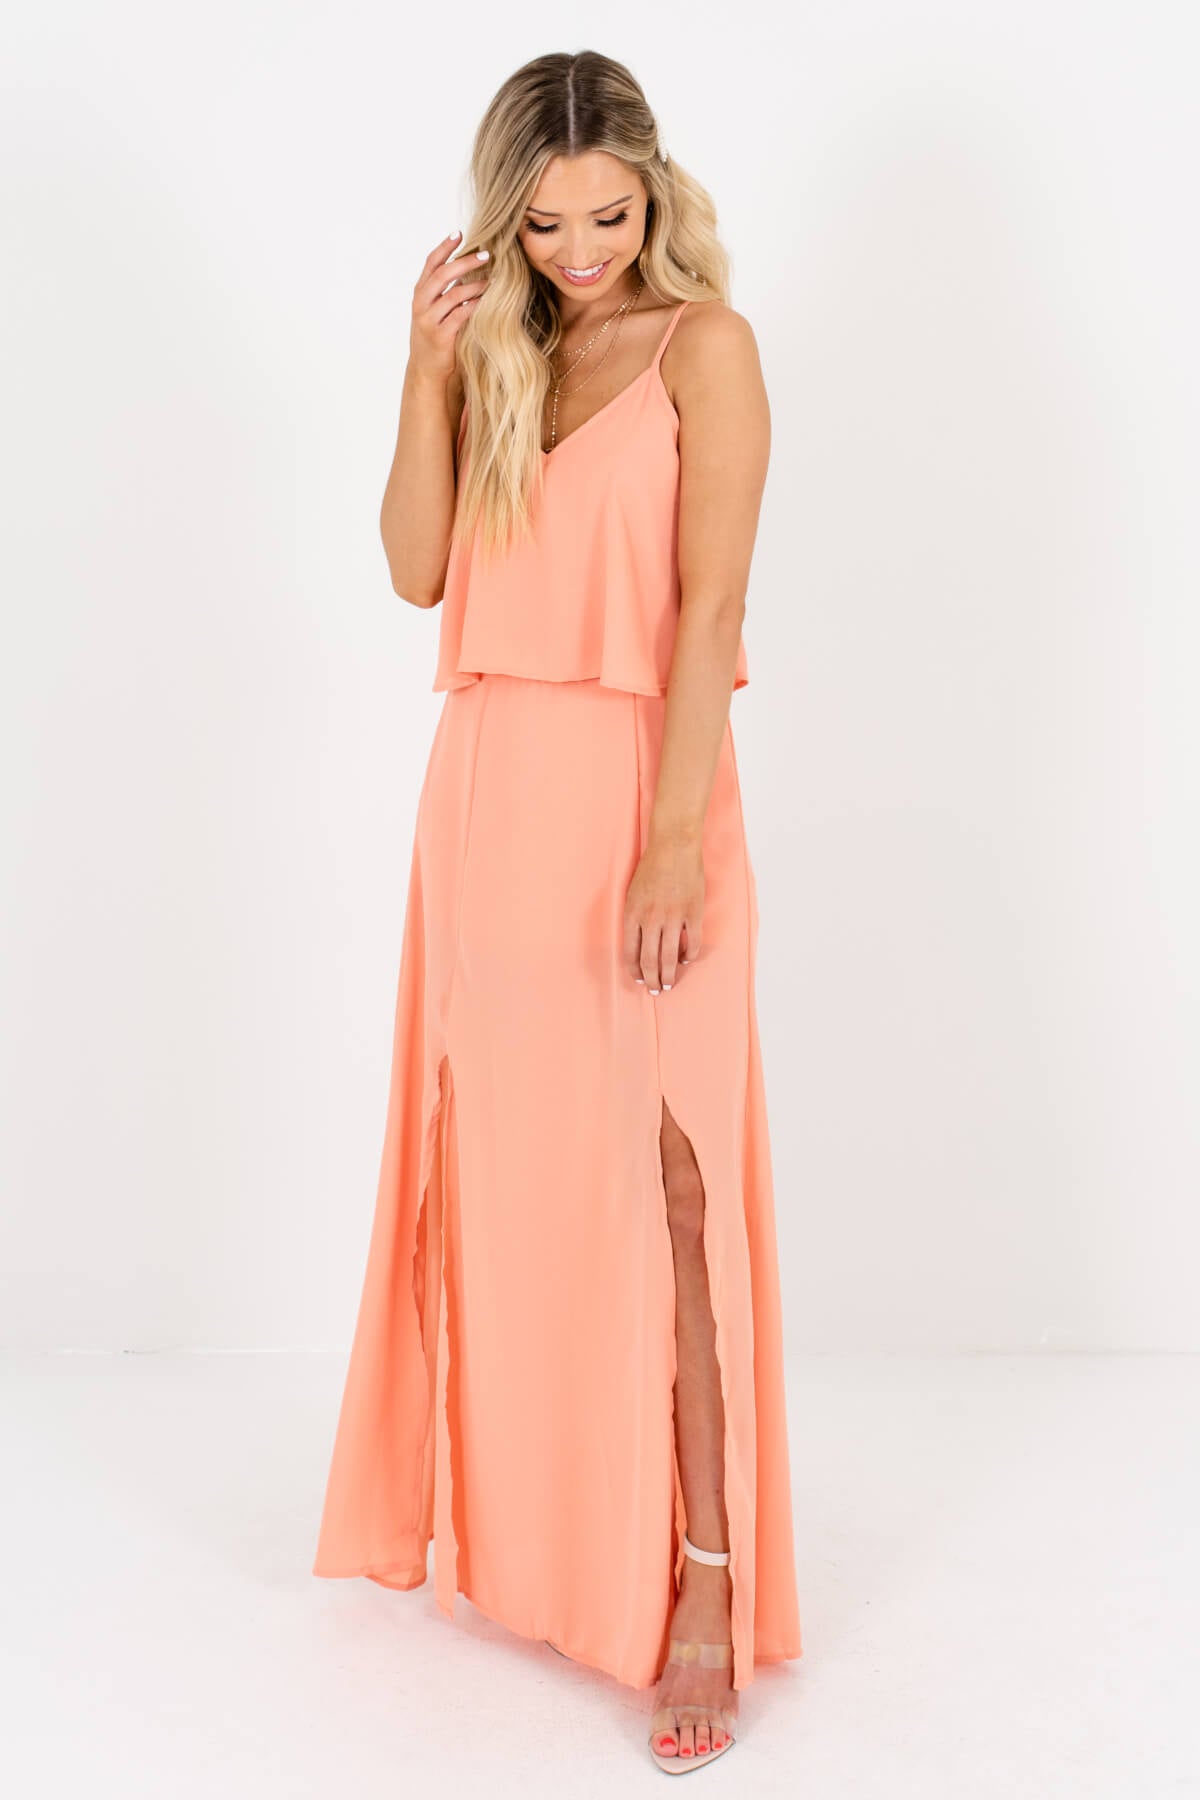 Peach Pink Boutique Maxi Length Dresses for Women